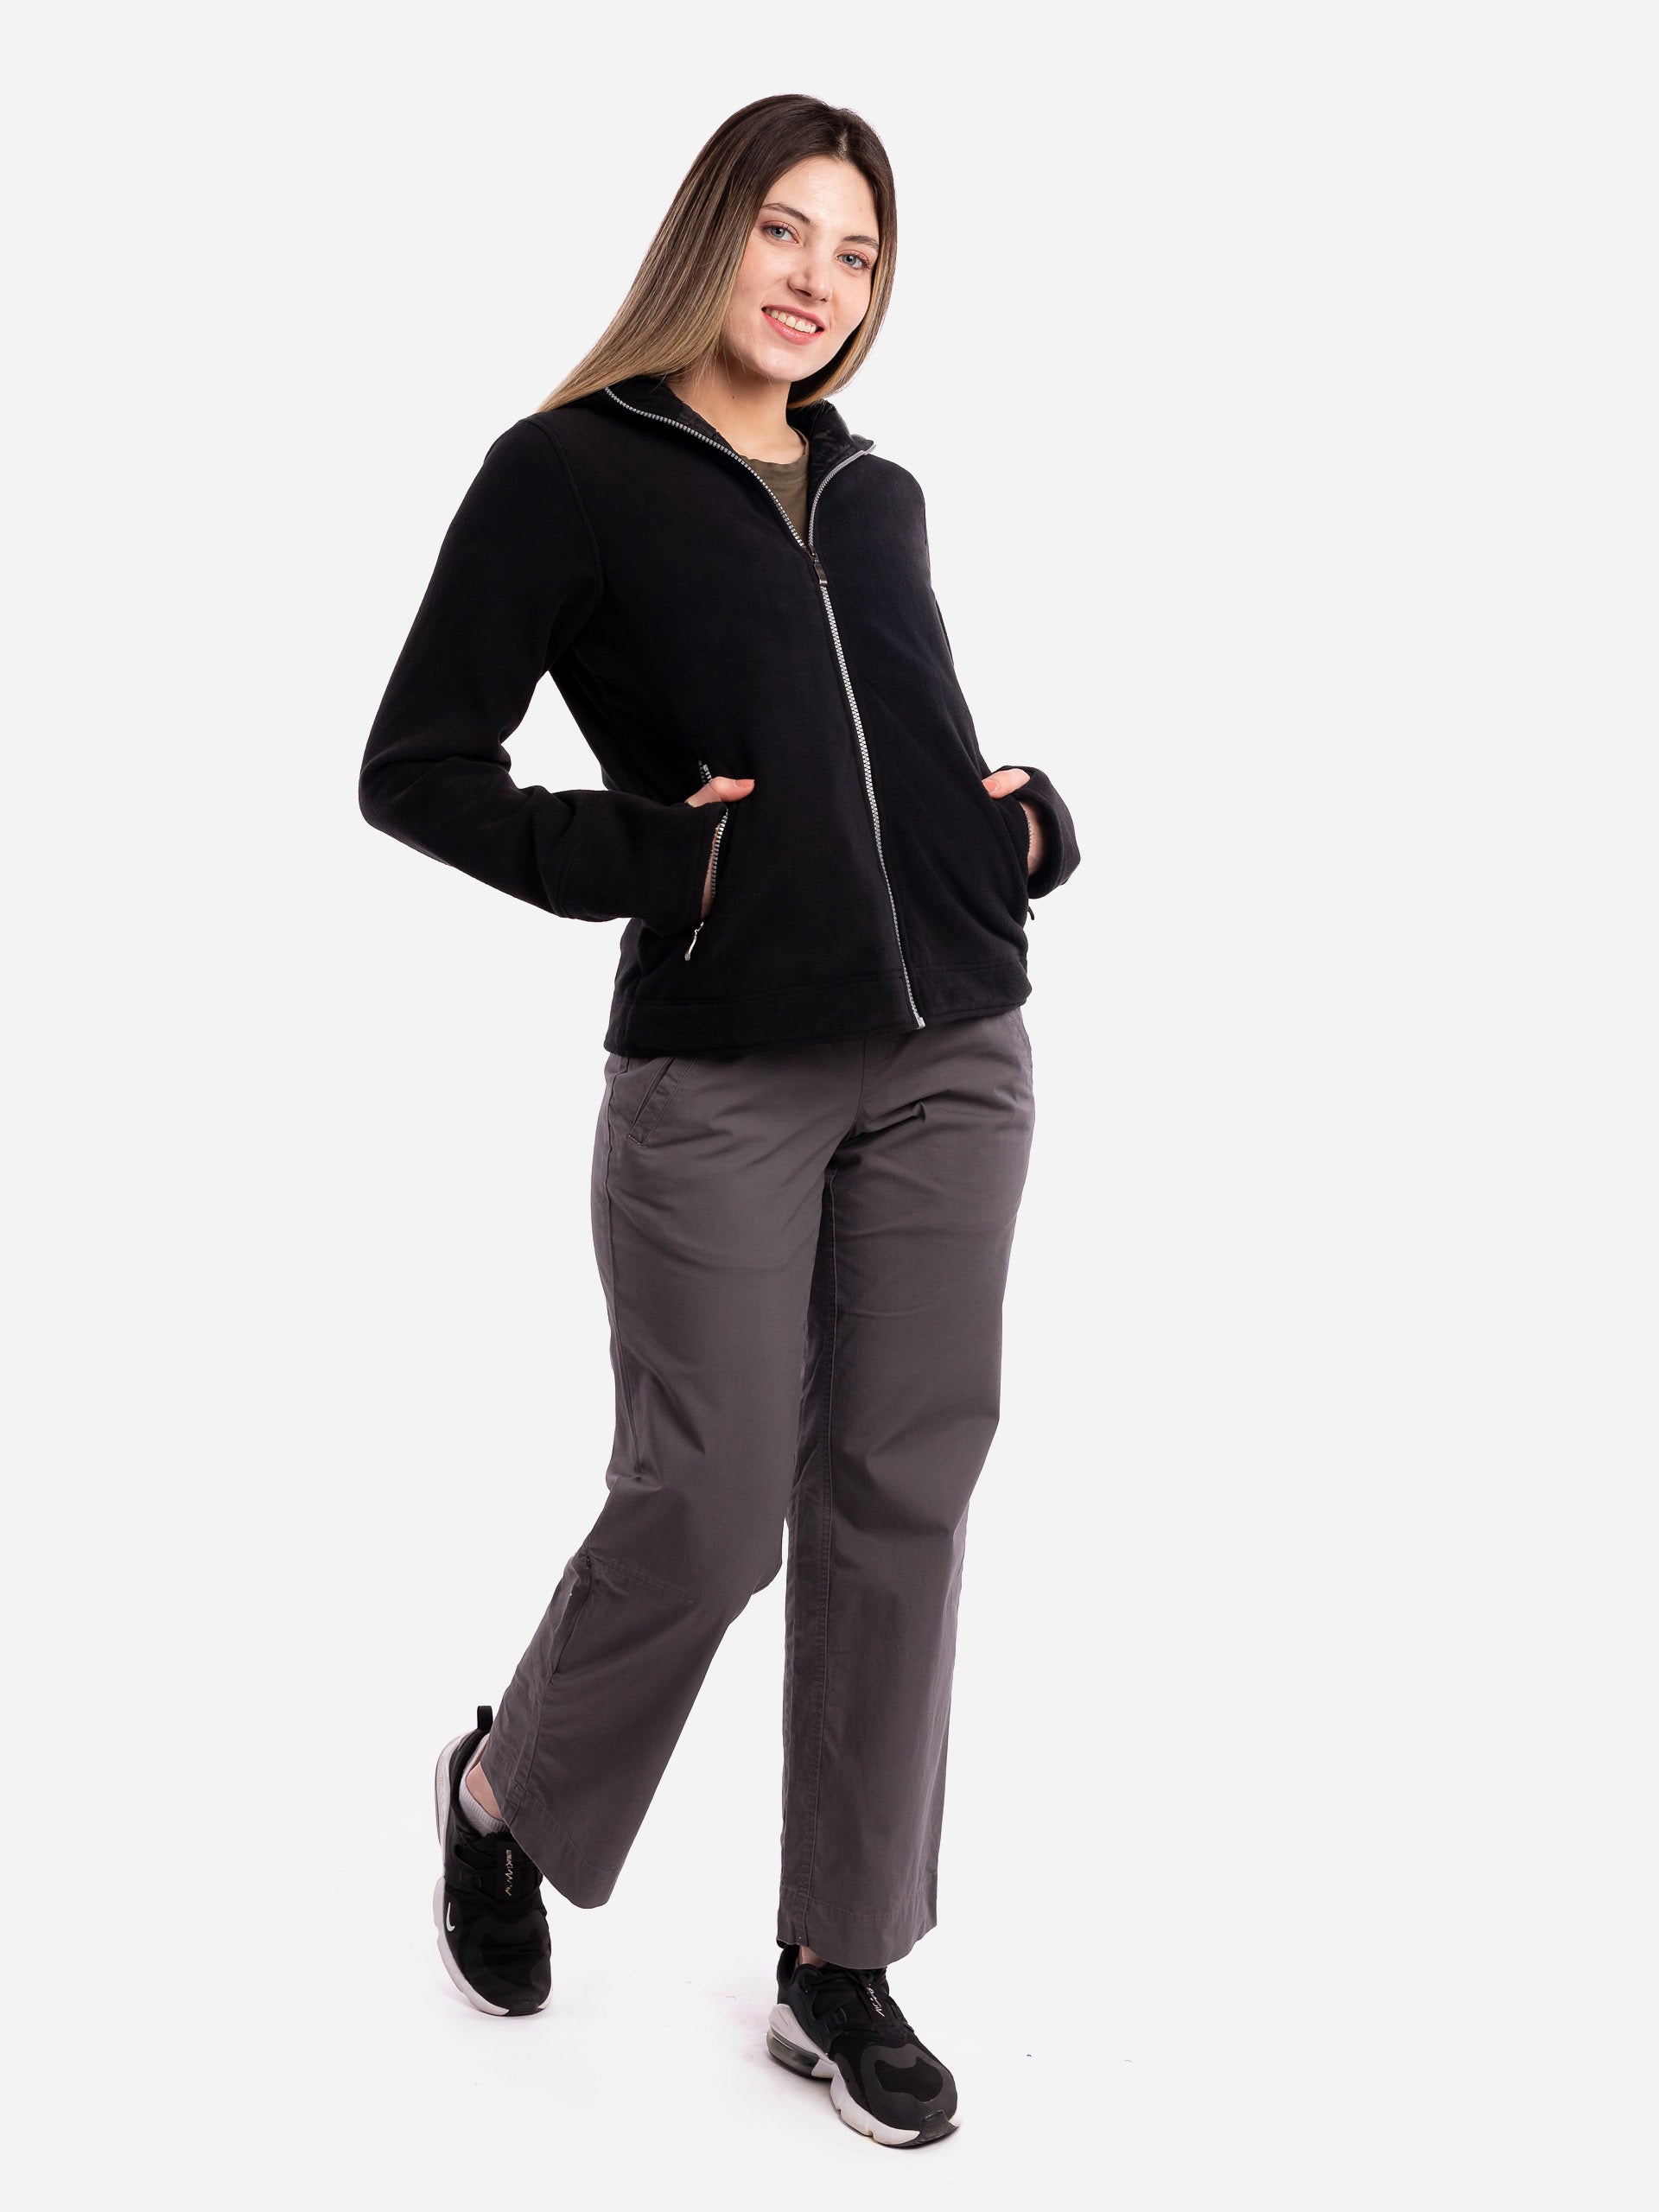 Chloé Adjustable Strap Women's Brown Size Onesize 100% Polyester